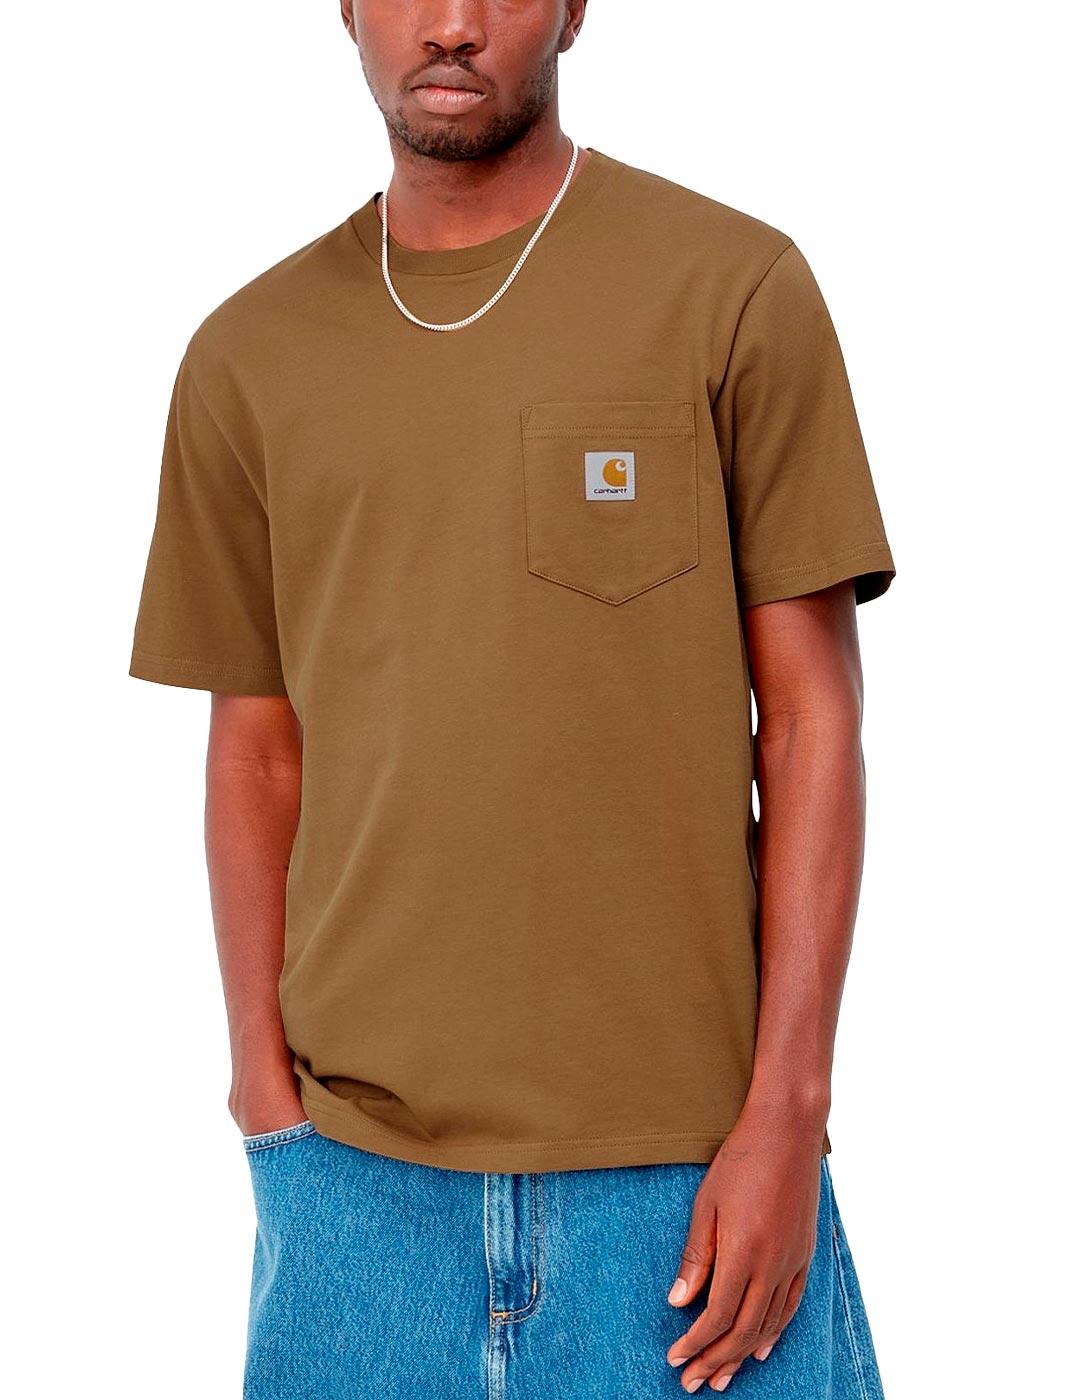 Camiseta Carhartt Pocket Marrón